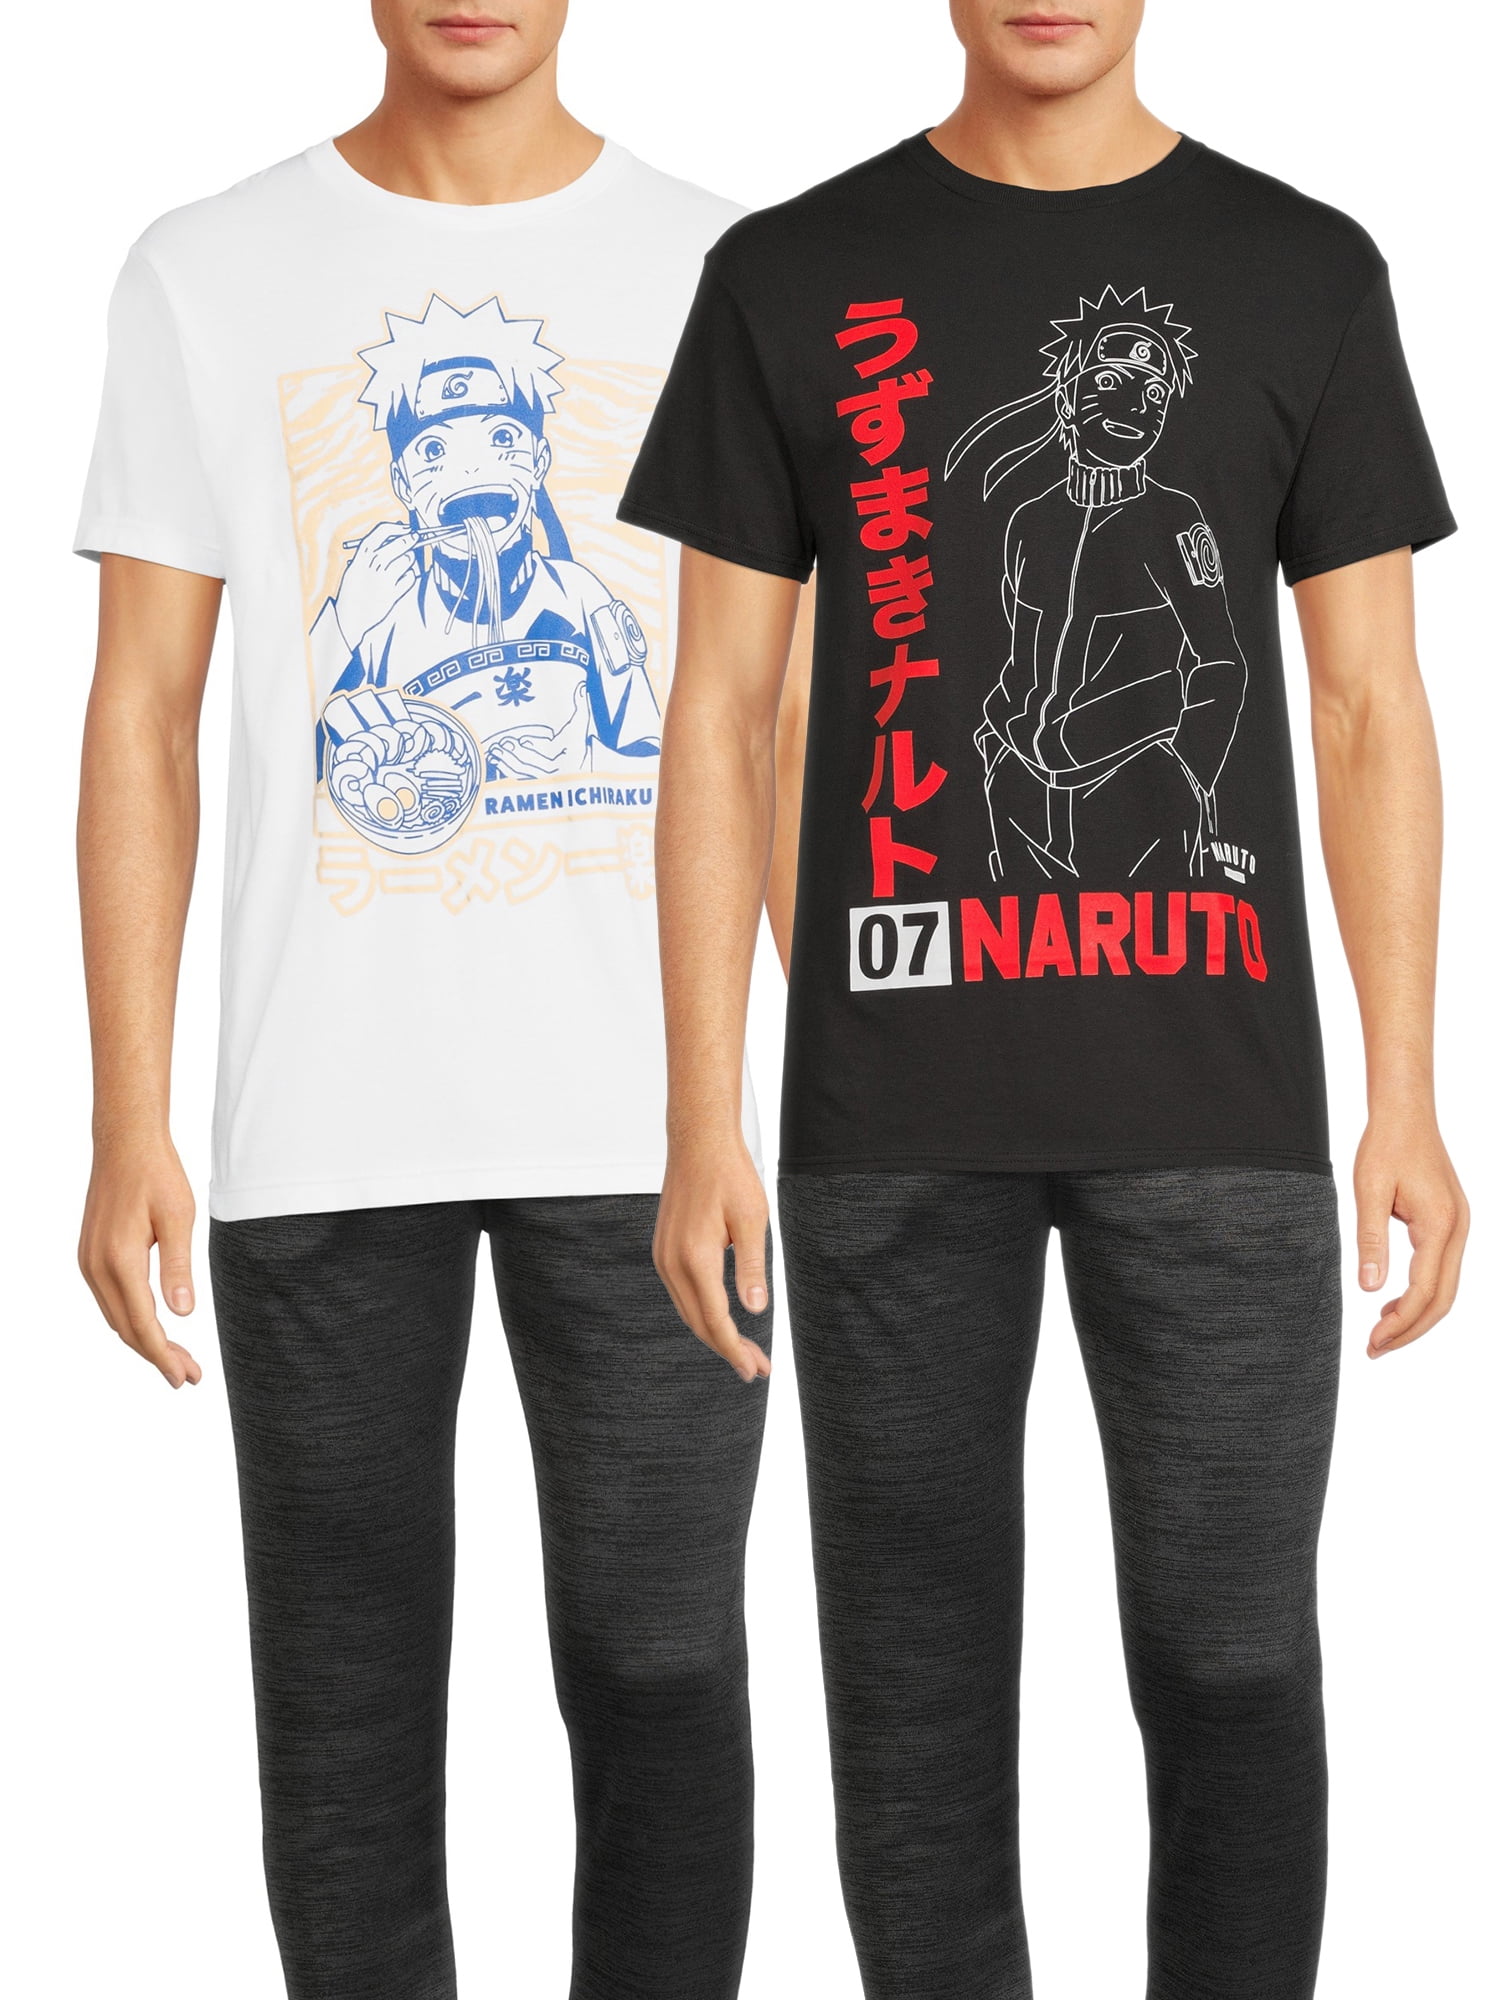 NEW Naruto Shippuden Masashi Kishimoto Mens Black Short Sleeve T-shirt S 2XL